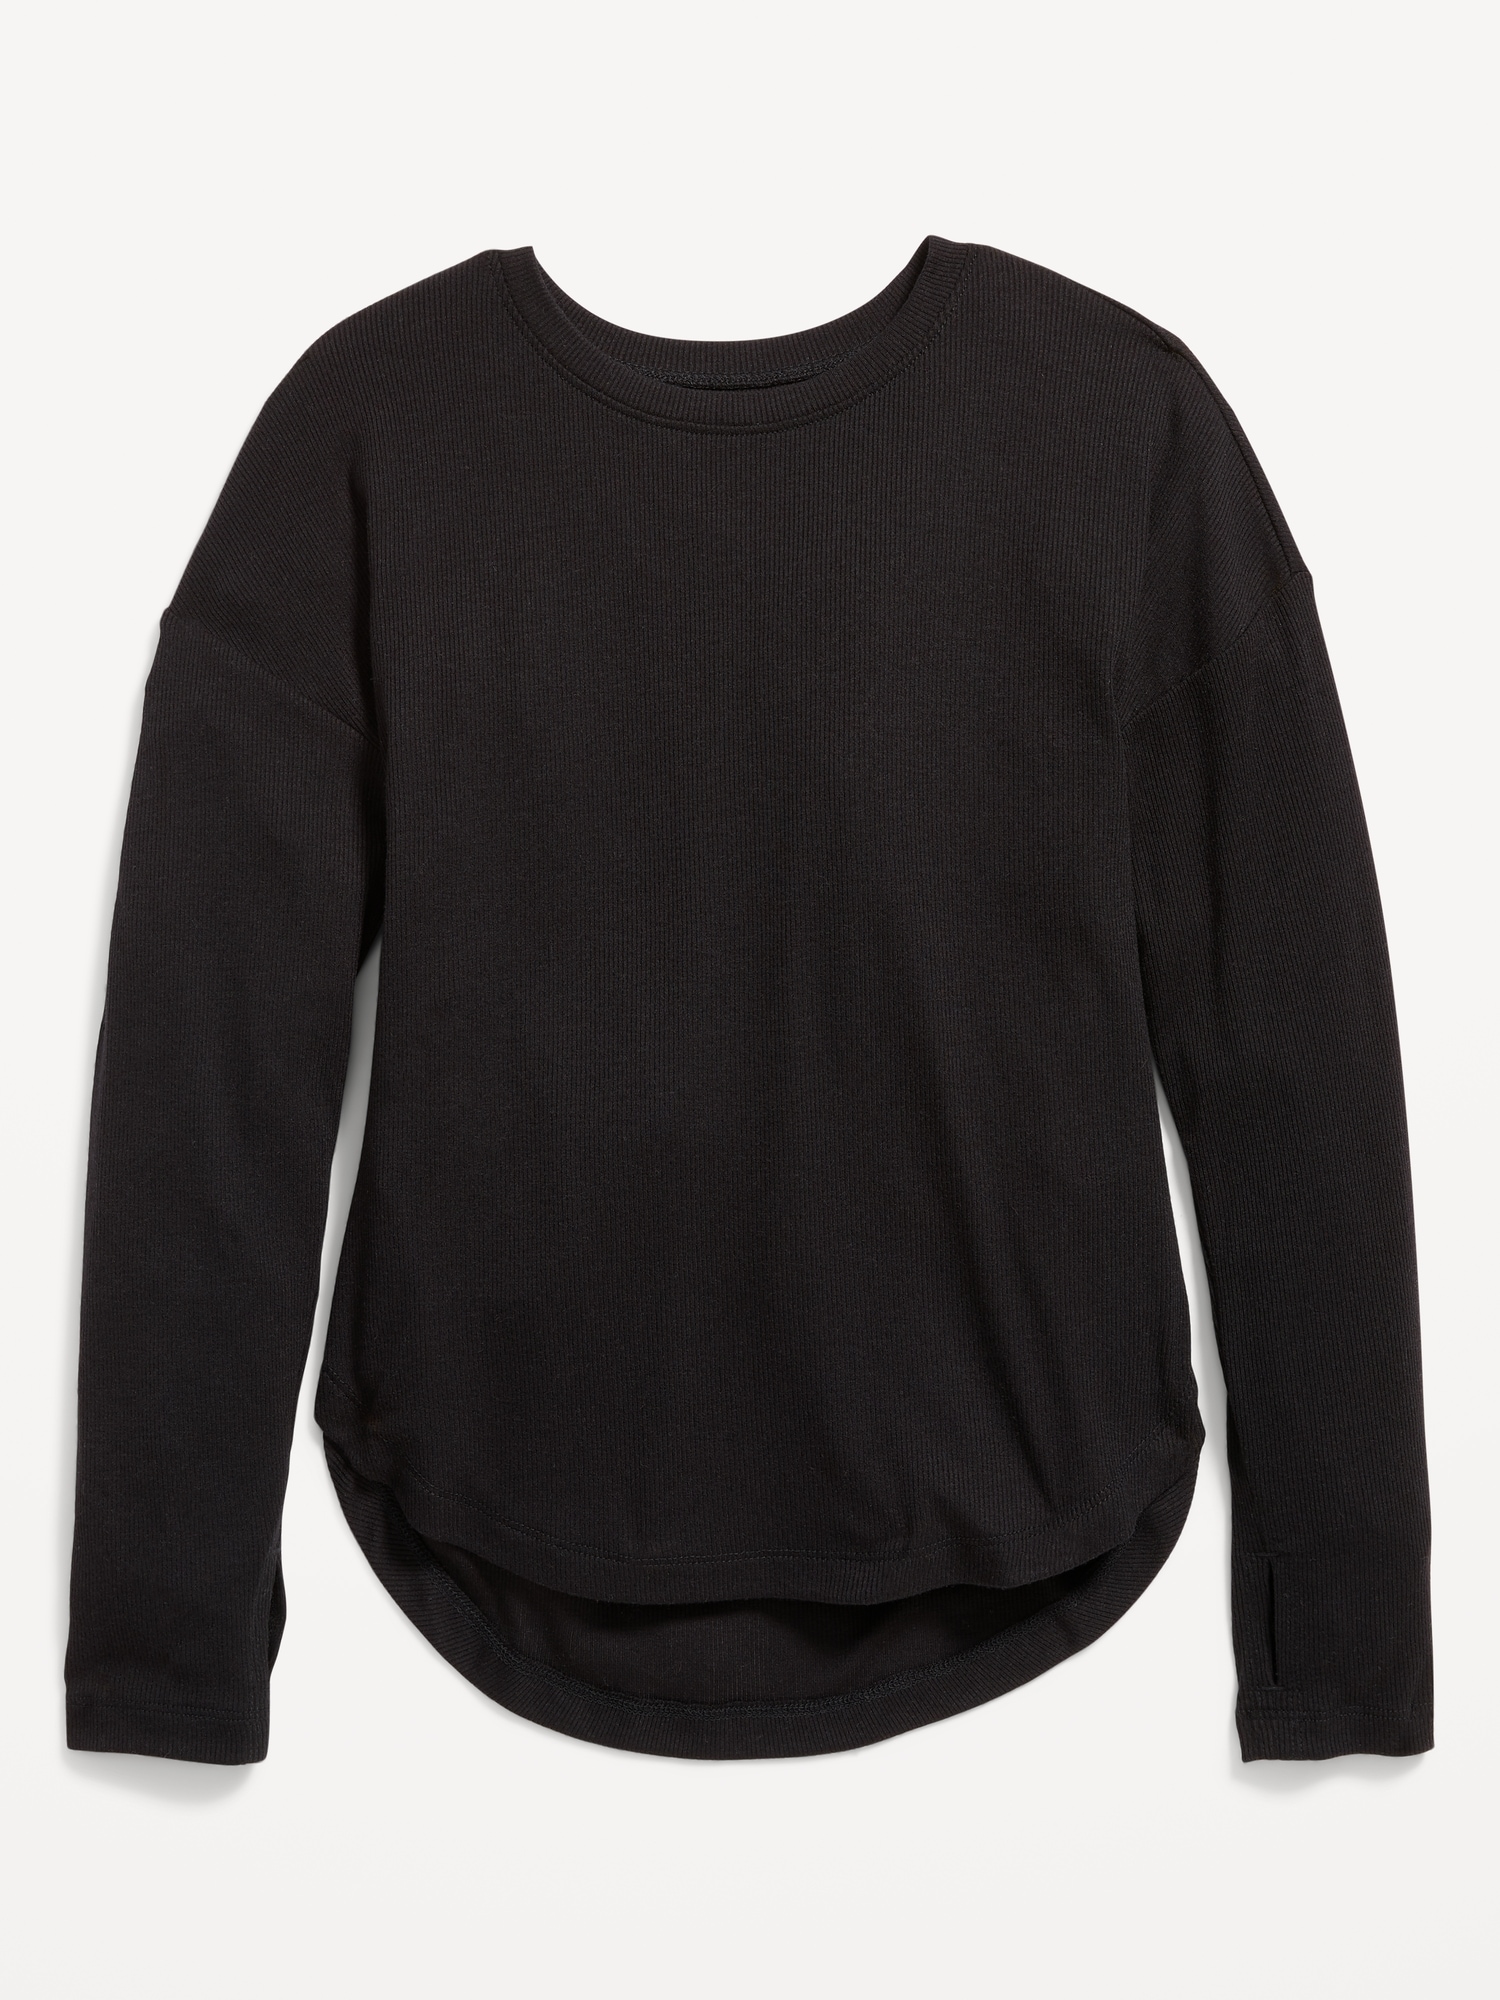 Old Navy UltraLite Long-Sleeve Rib-Knit Tunic T-Shirt for Girls black. 1